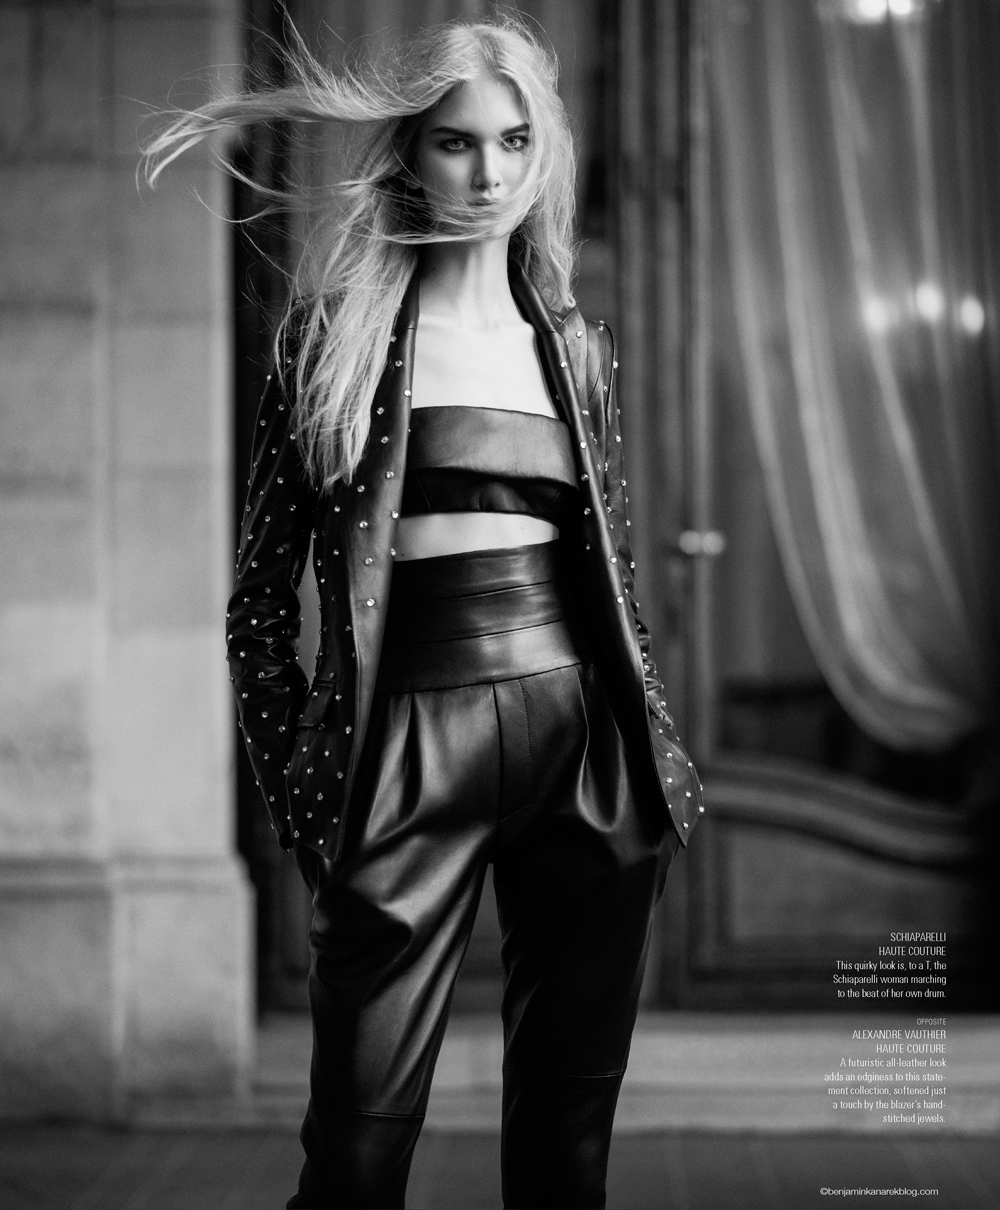 Anna Martynova in Alexandre Vauthier Haute Couture © Benjamin Kanarek